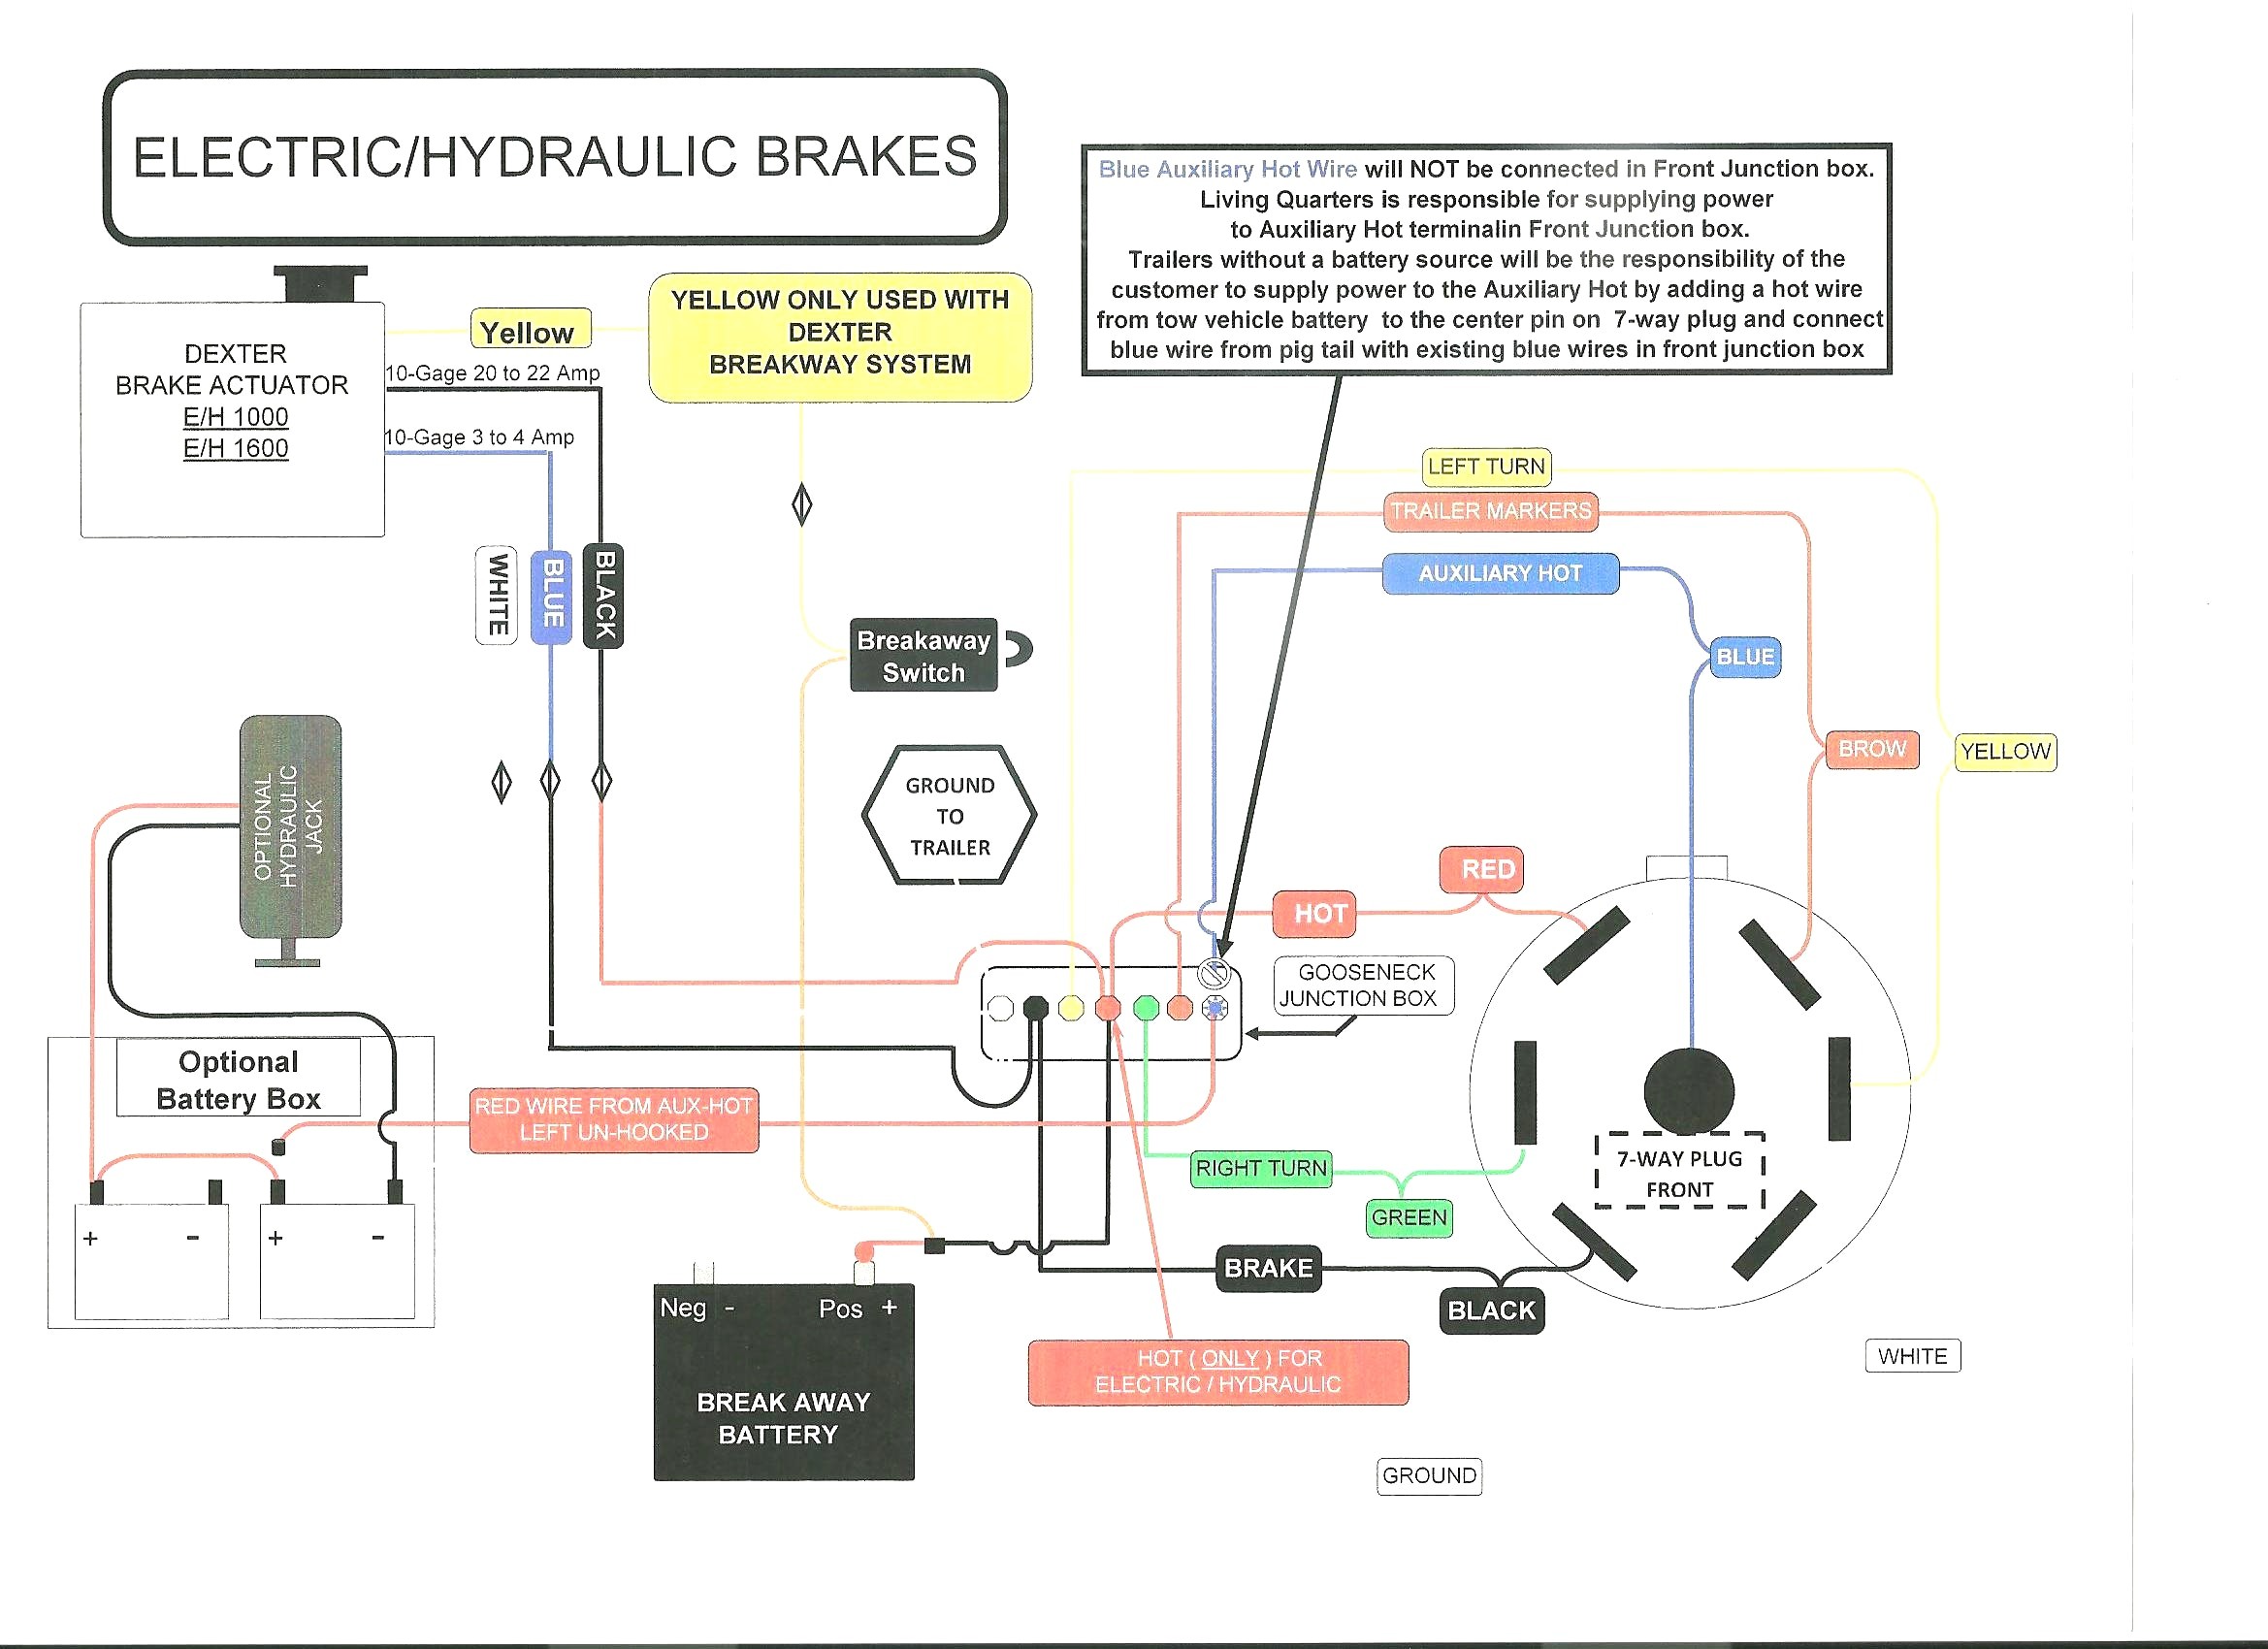 Trailer Breakaway Kit Wiring Diagram Electric Brake Controller Wiring Diagram Wiring Diagram Of Trailer Breakaway Kit Wiring Diagram